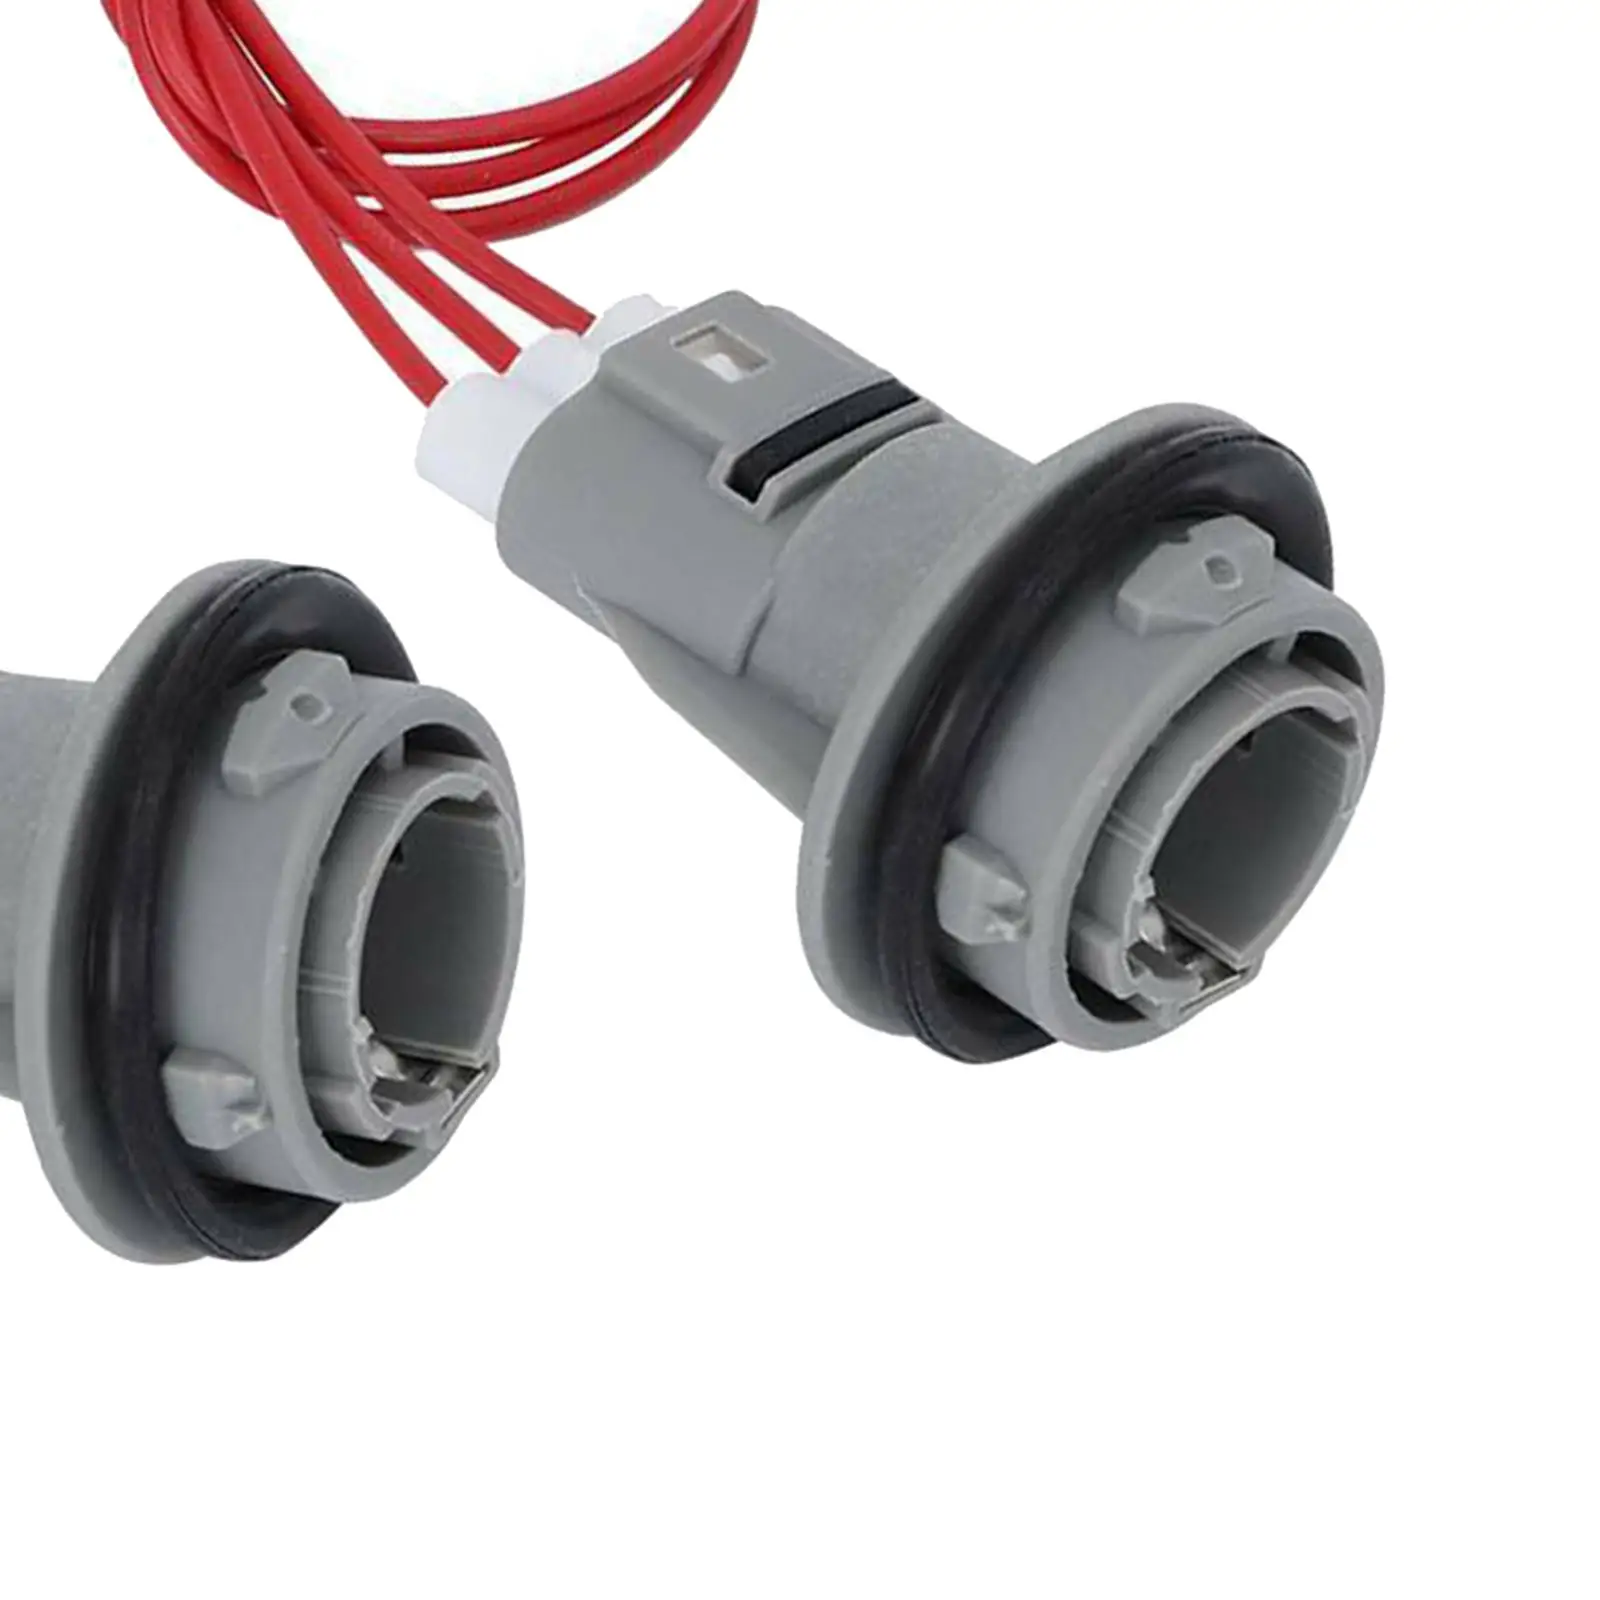 2 Pieces Front Turn Signal Blinker Light Bulb Socket & Connector Harness Set